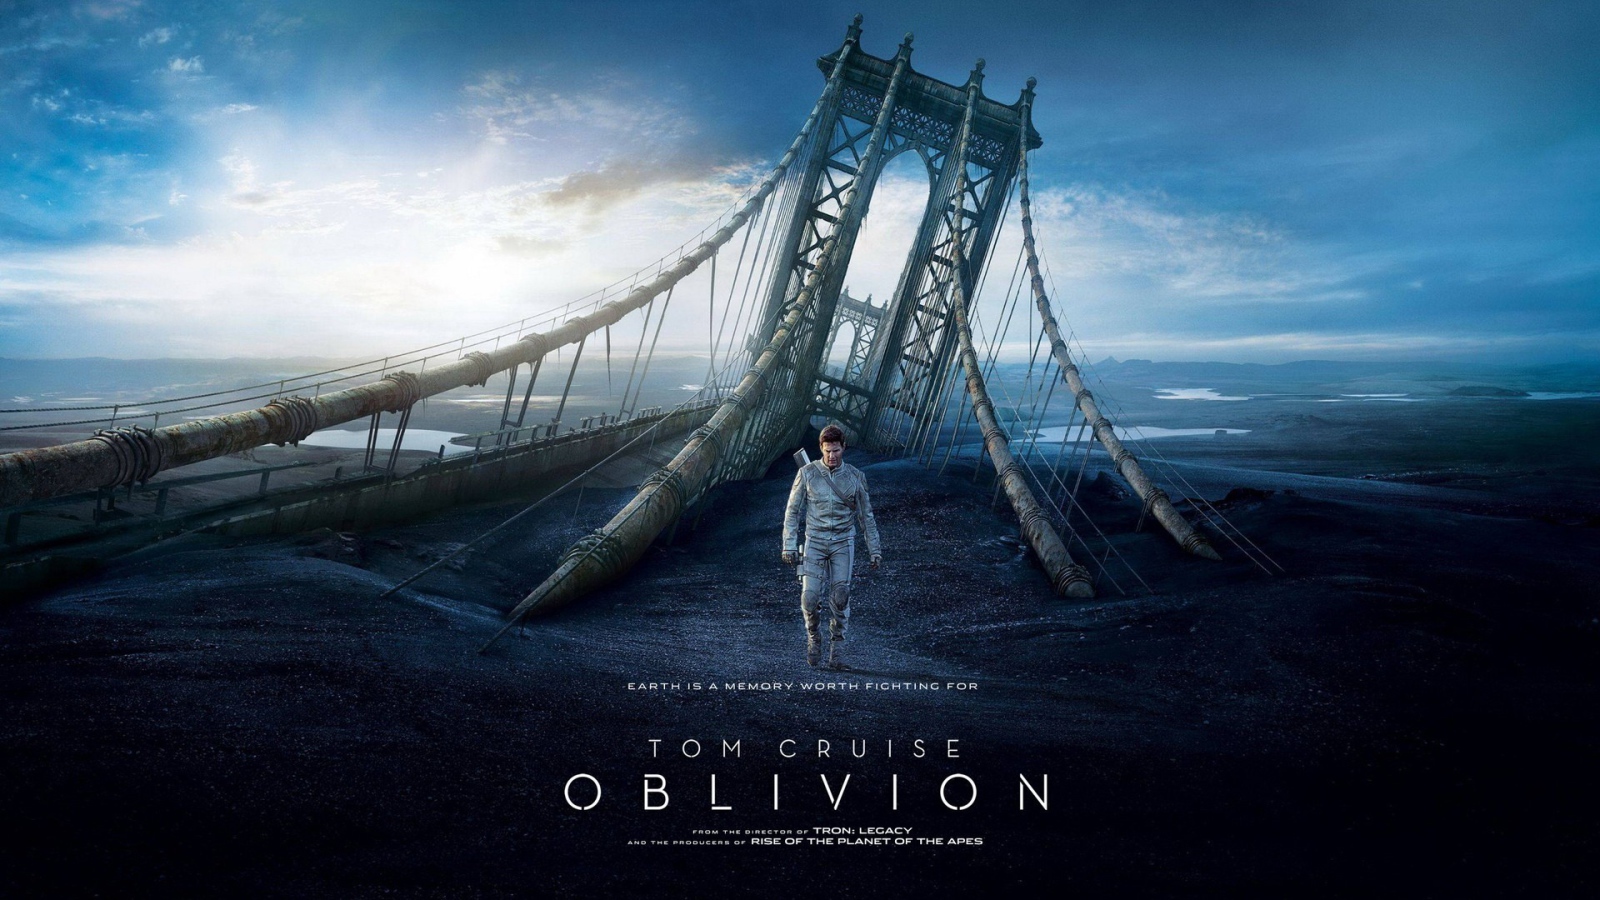 Том Круз на фоне руин моста из фильма Обливион